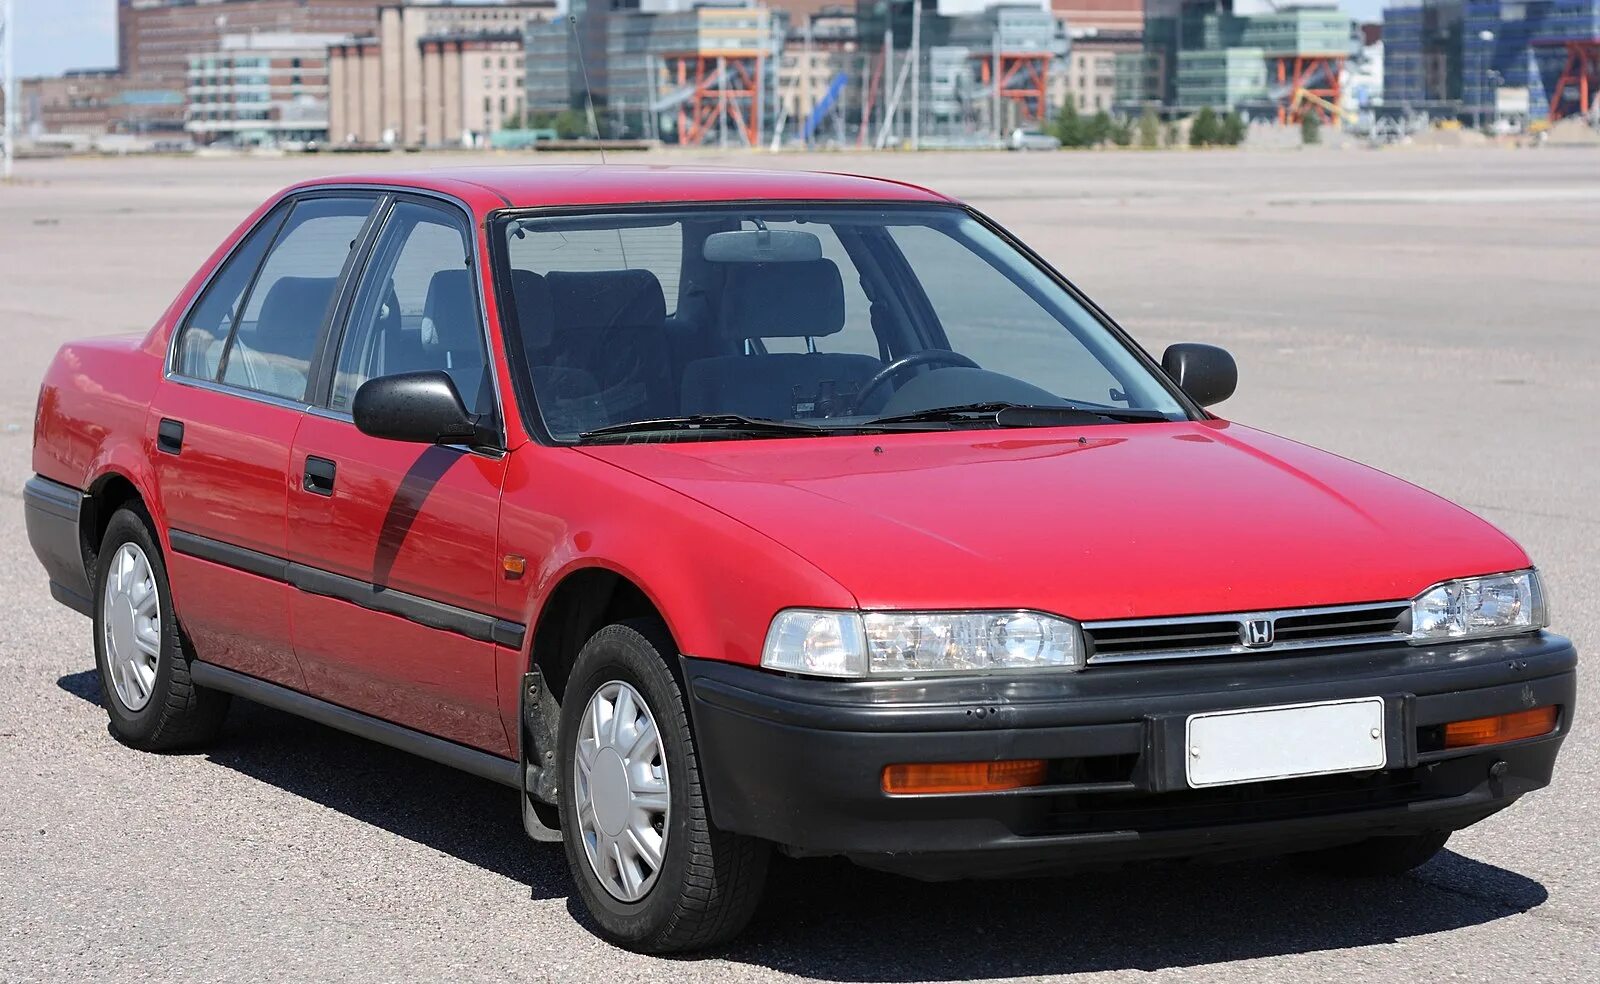 Honda Accord 1993. Хонда Accord 1993. Хонда Аккорд 4 90. Хонда Аккорд 1993 года 2 литра. Старые honda